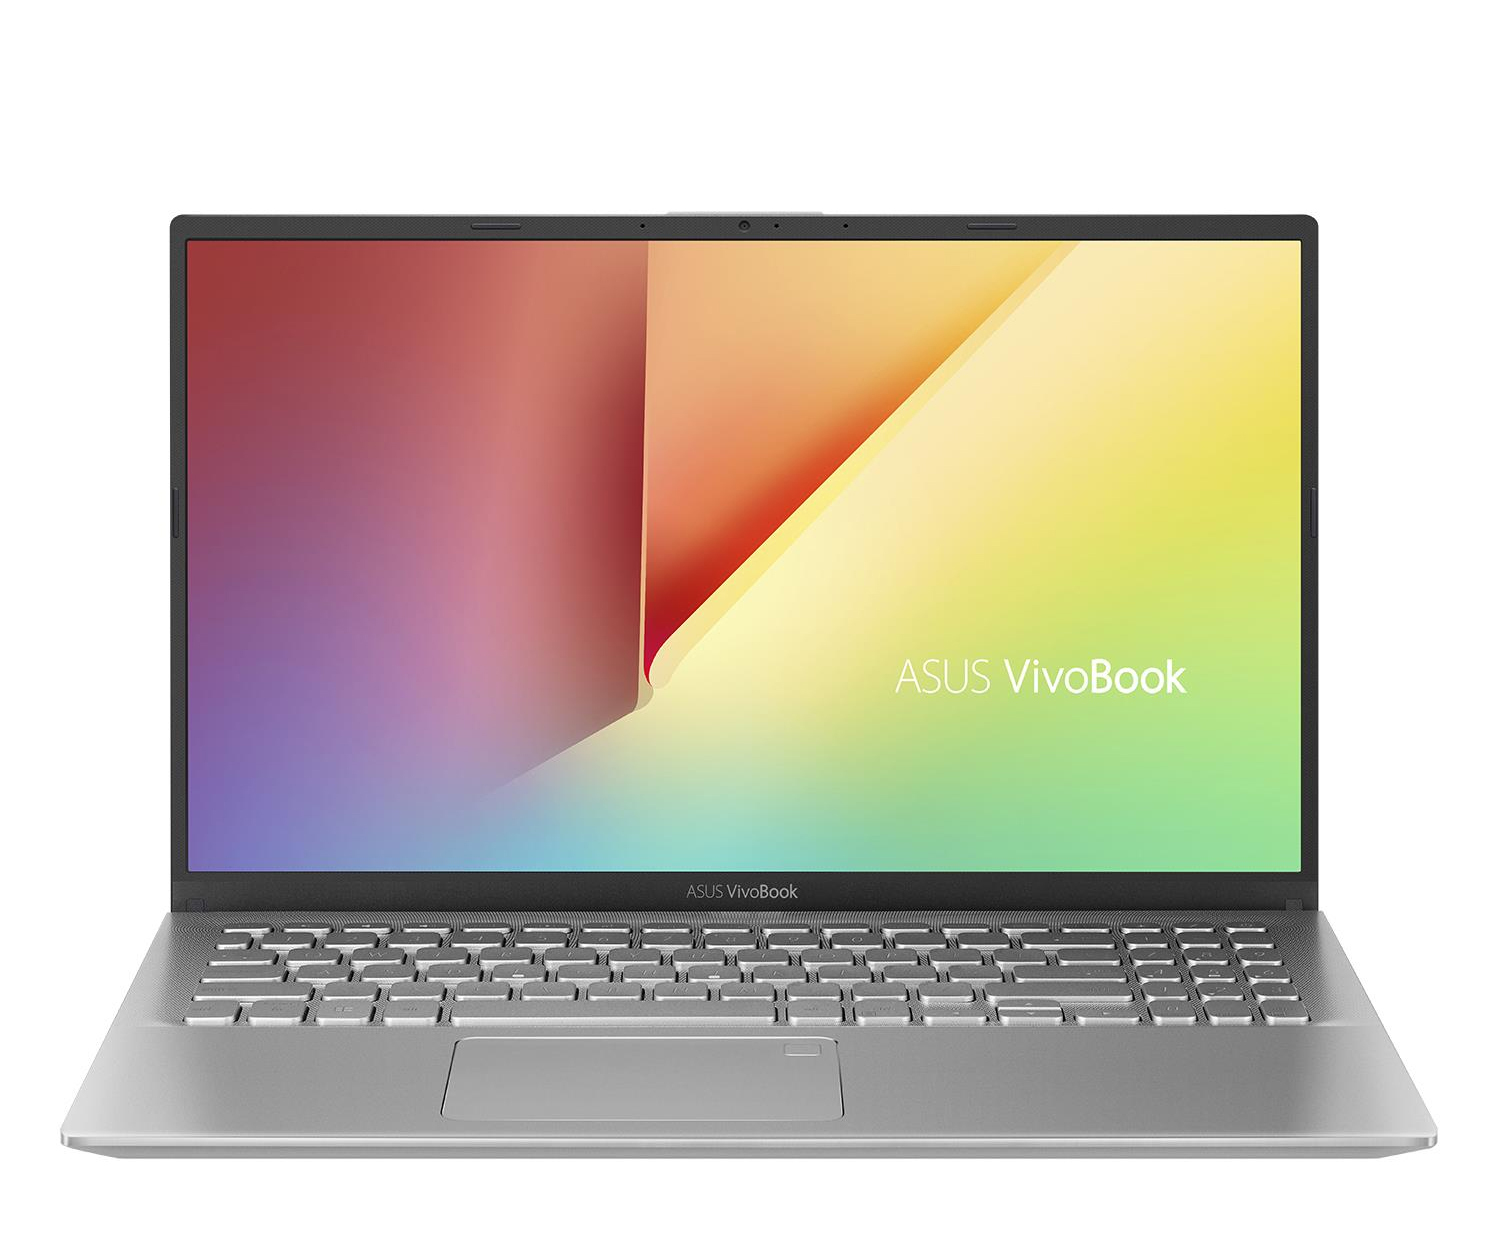 Laptop Asus VivoBook A512DA-EJ829T - AMD Ryzen 3-3200U, 4GB RAM, SSD 512GB, Radeon Vega 3 Graphics, 15.6 inch